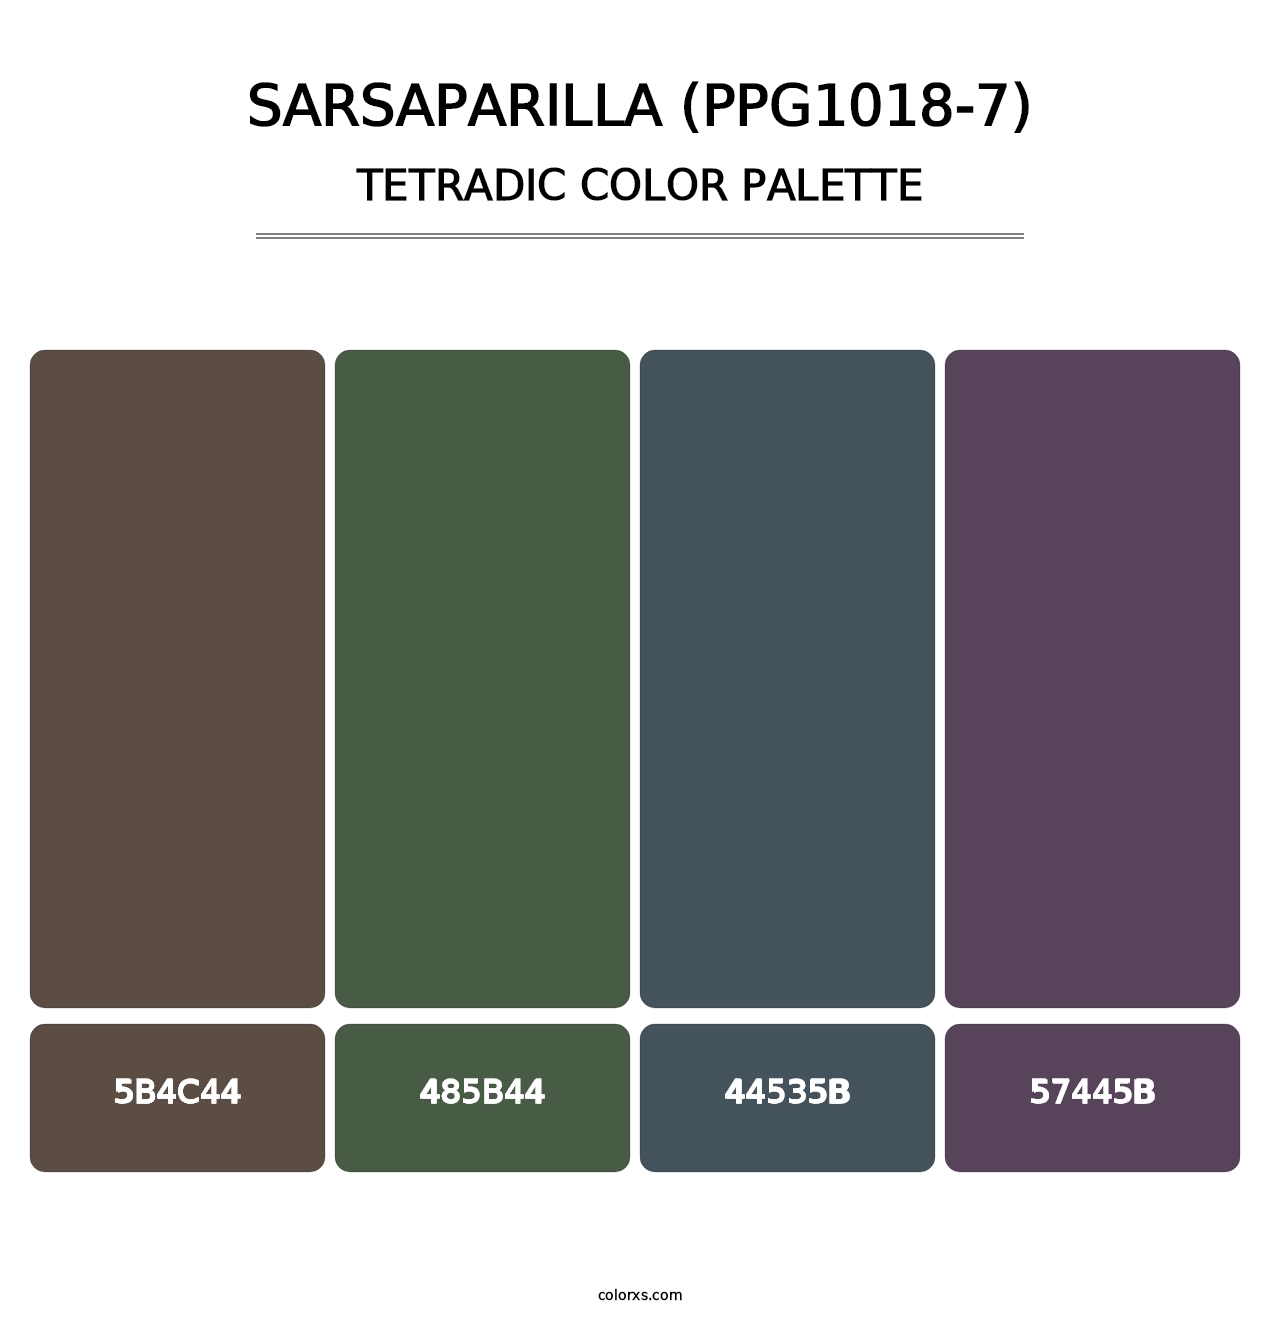 Sarsaparilla (PPG1018-7) - Tetradic Color Palette